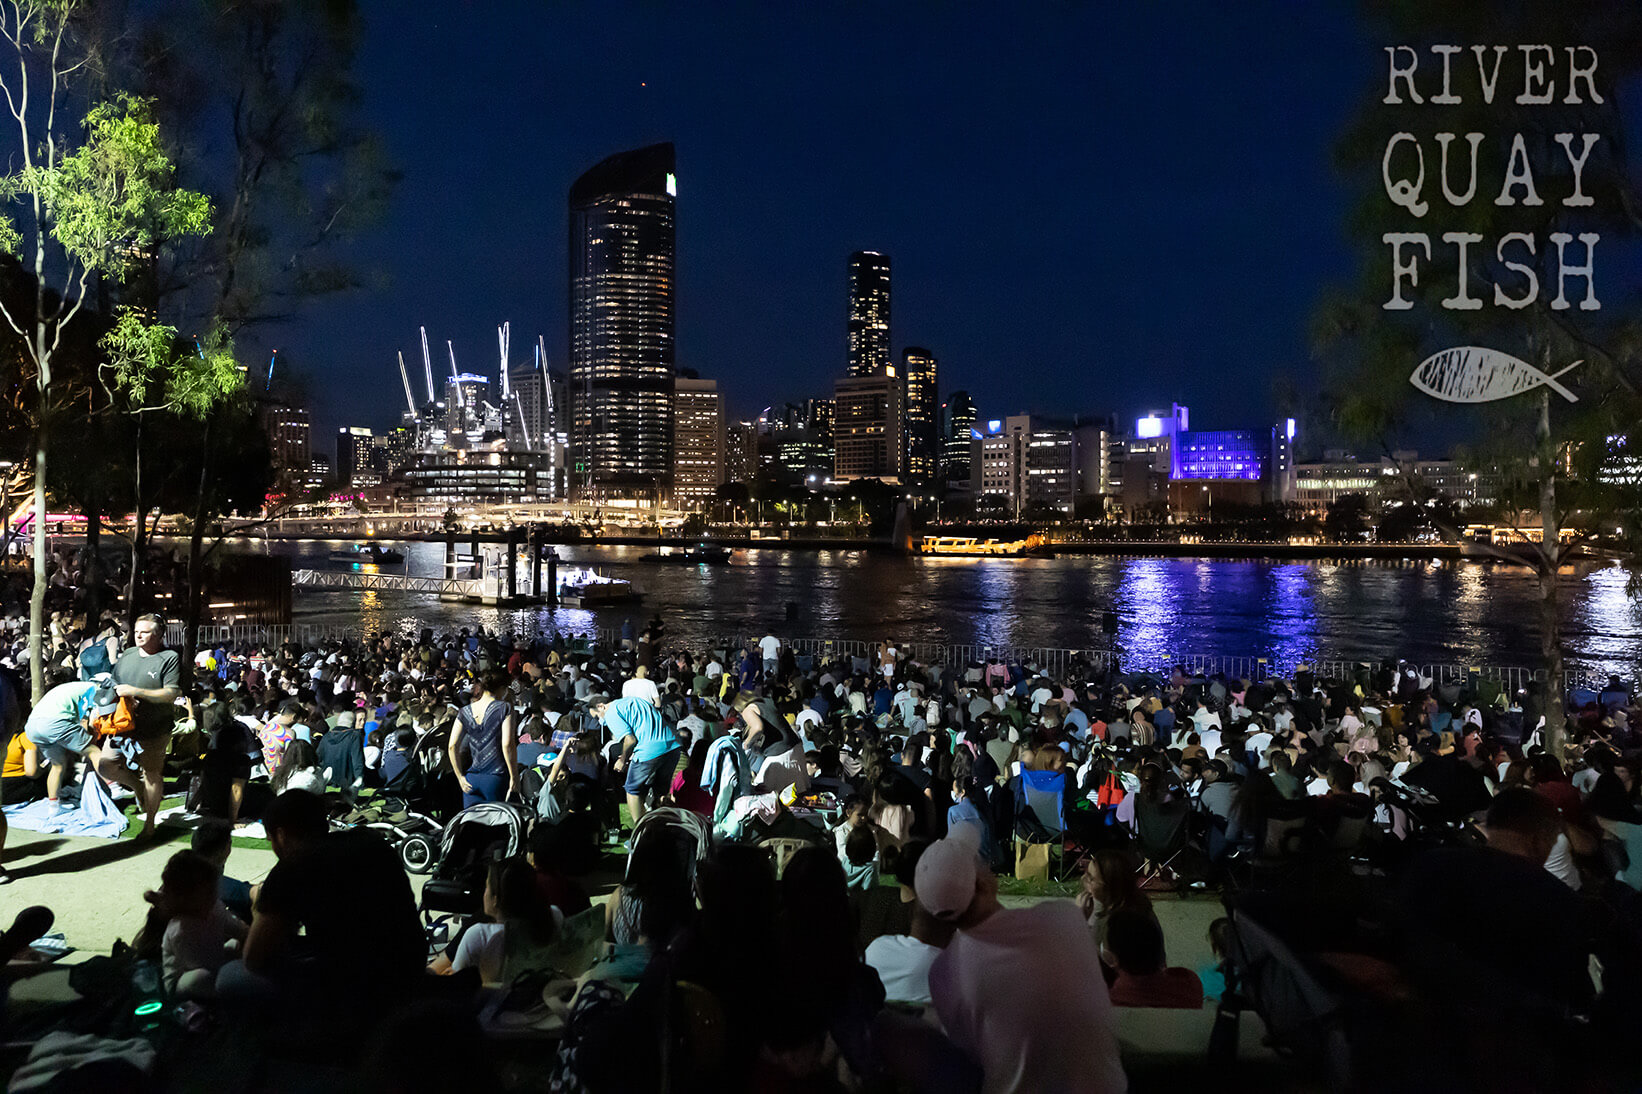 River Fire 2022 - Brisbane's best Riverfront Dinner Packages - River Quay Fish 4